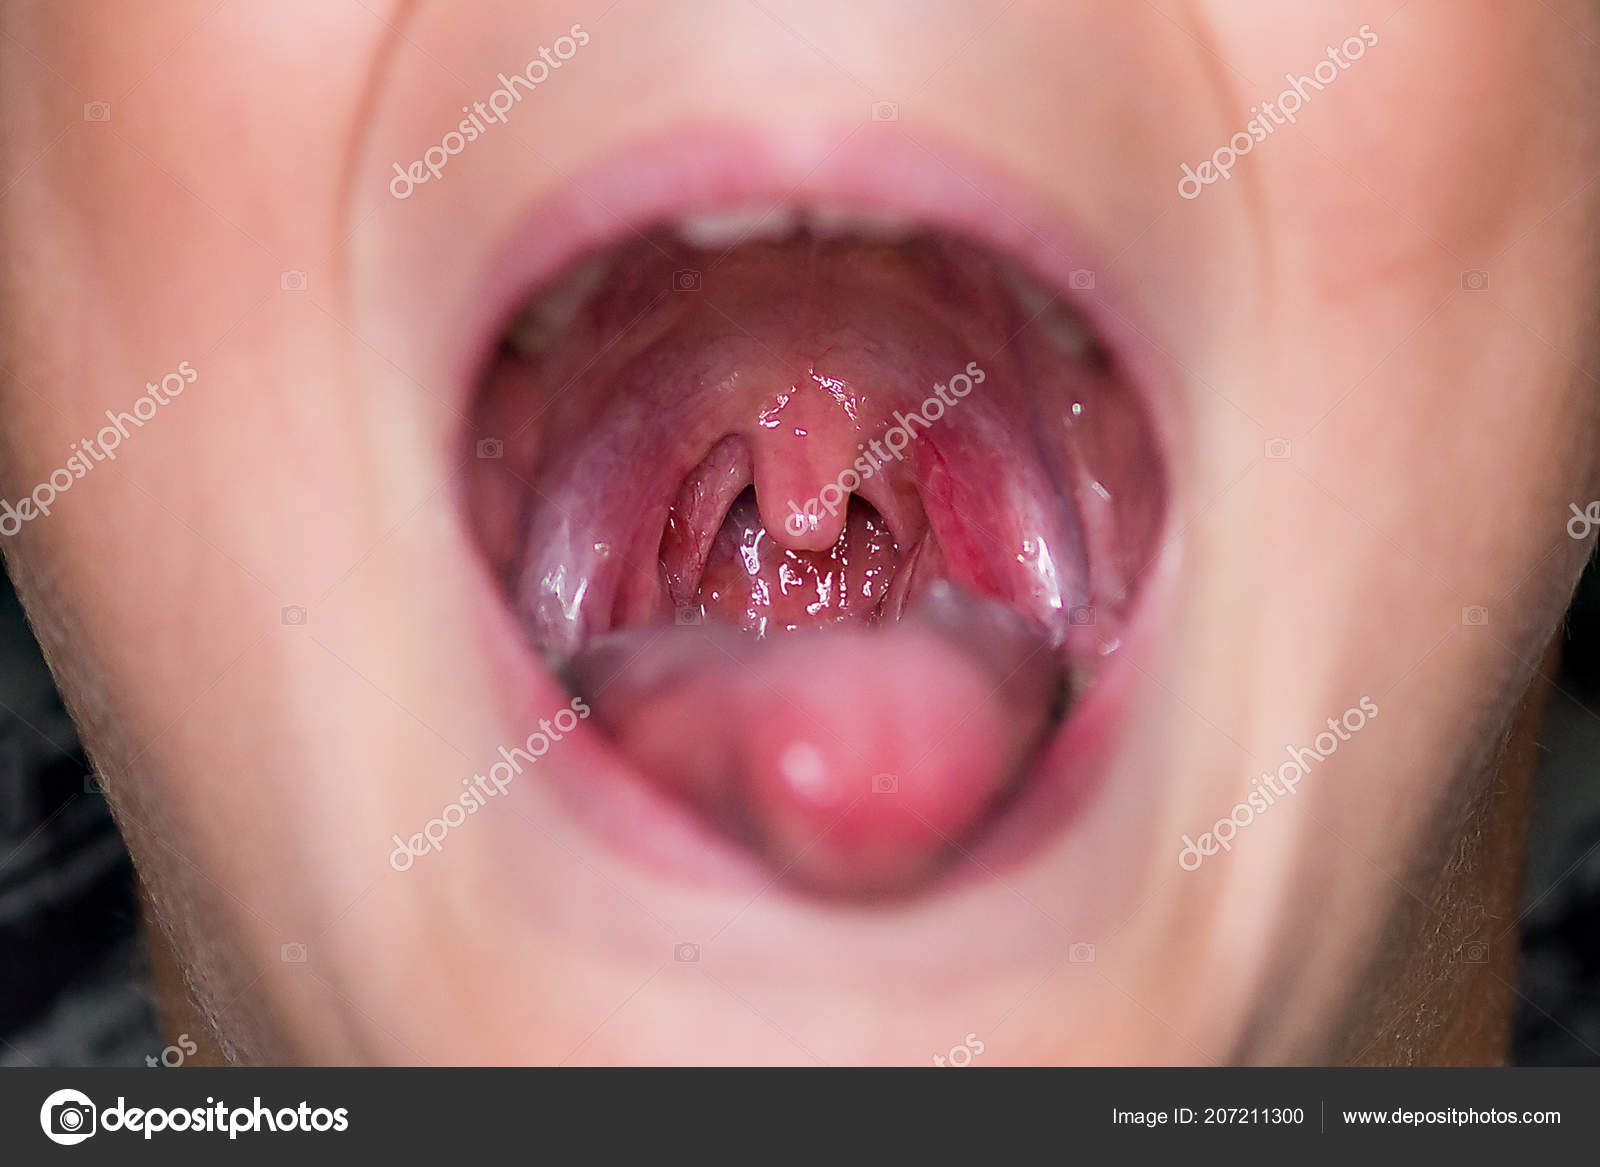 Throat Photos